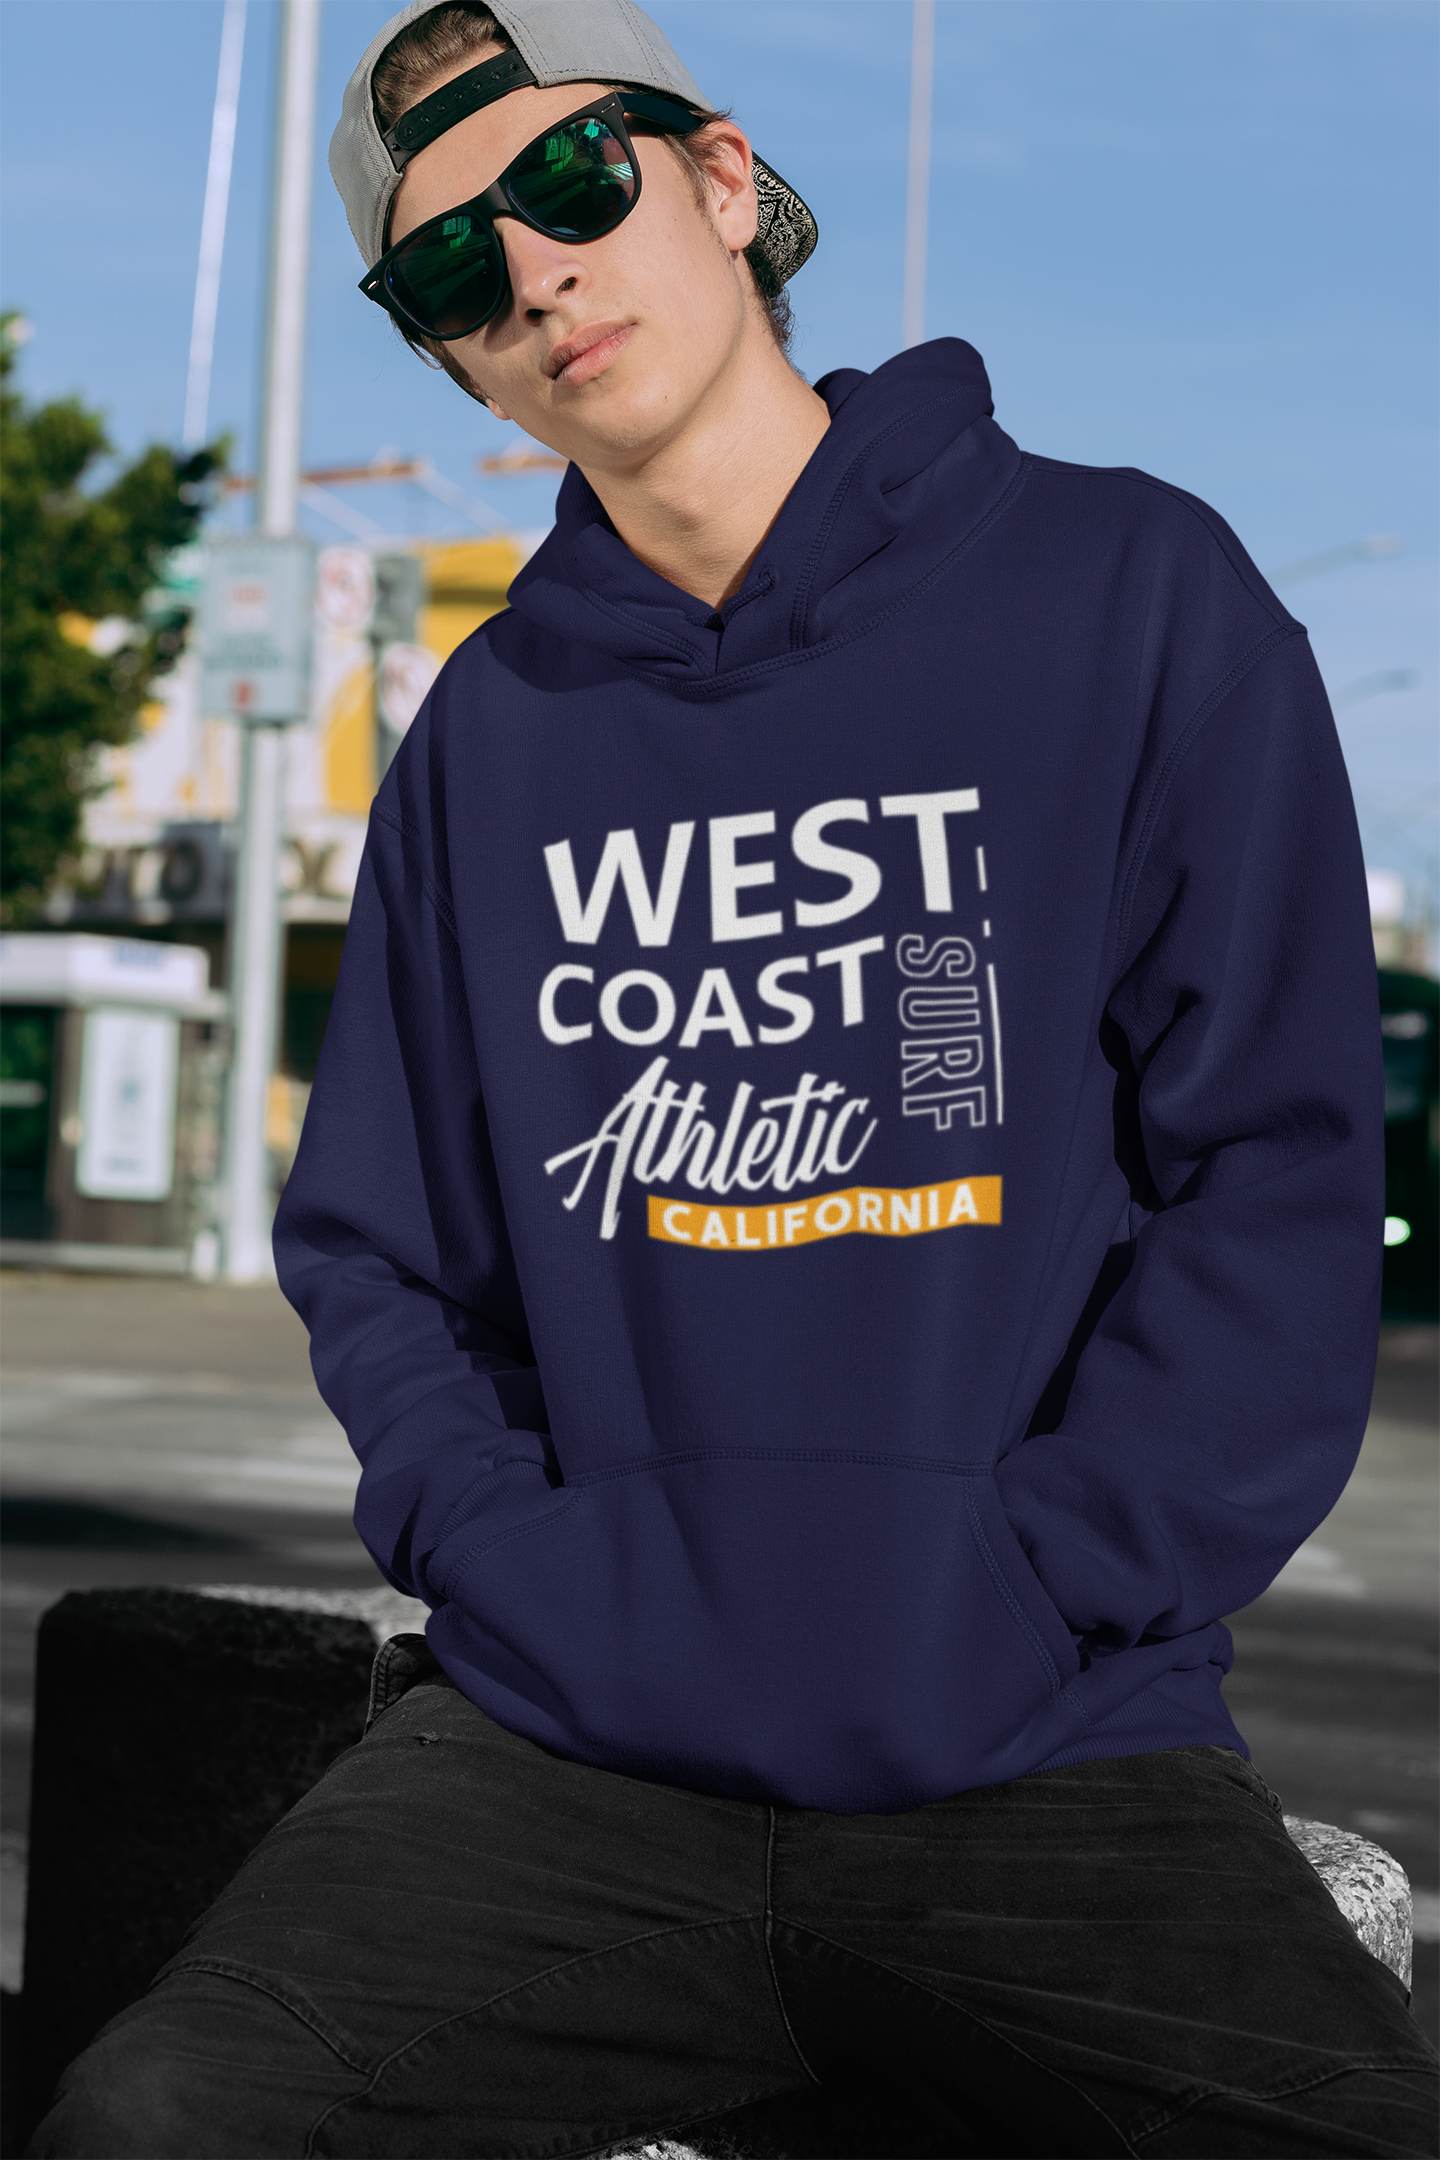 Stylish Hoodies for Men | West Coast Athletic Activewear / Athleisure navy